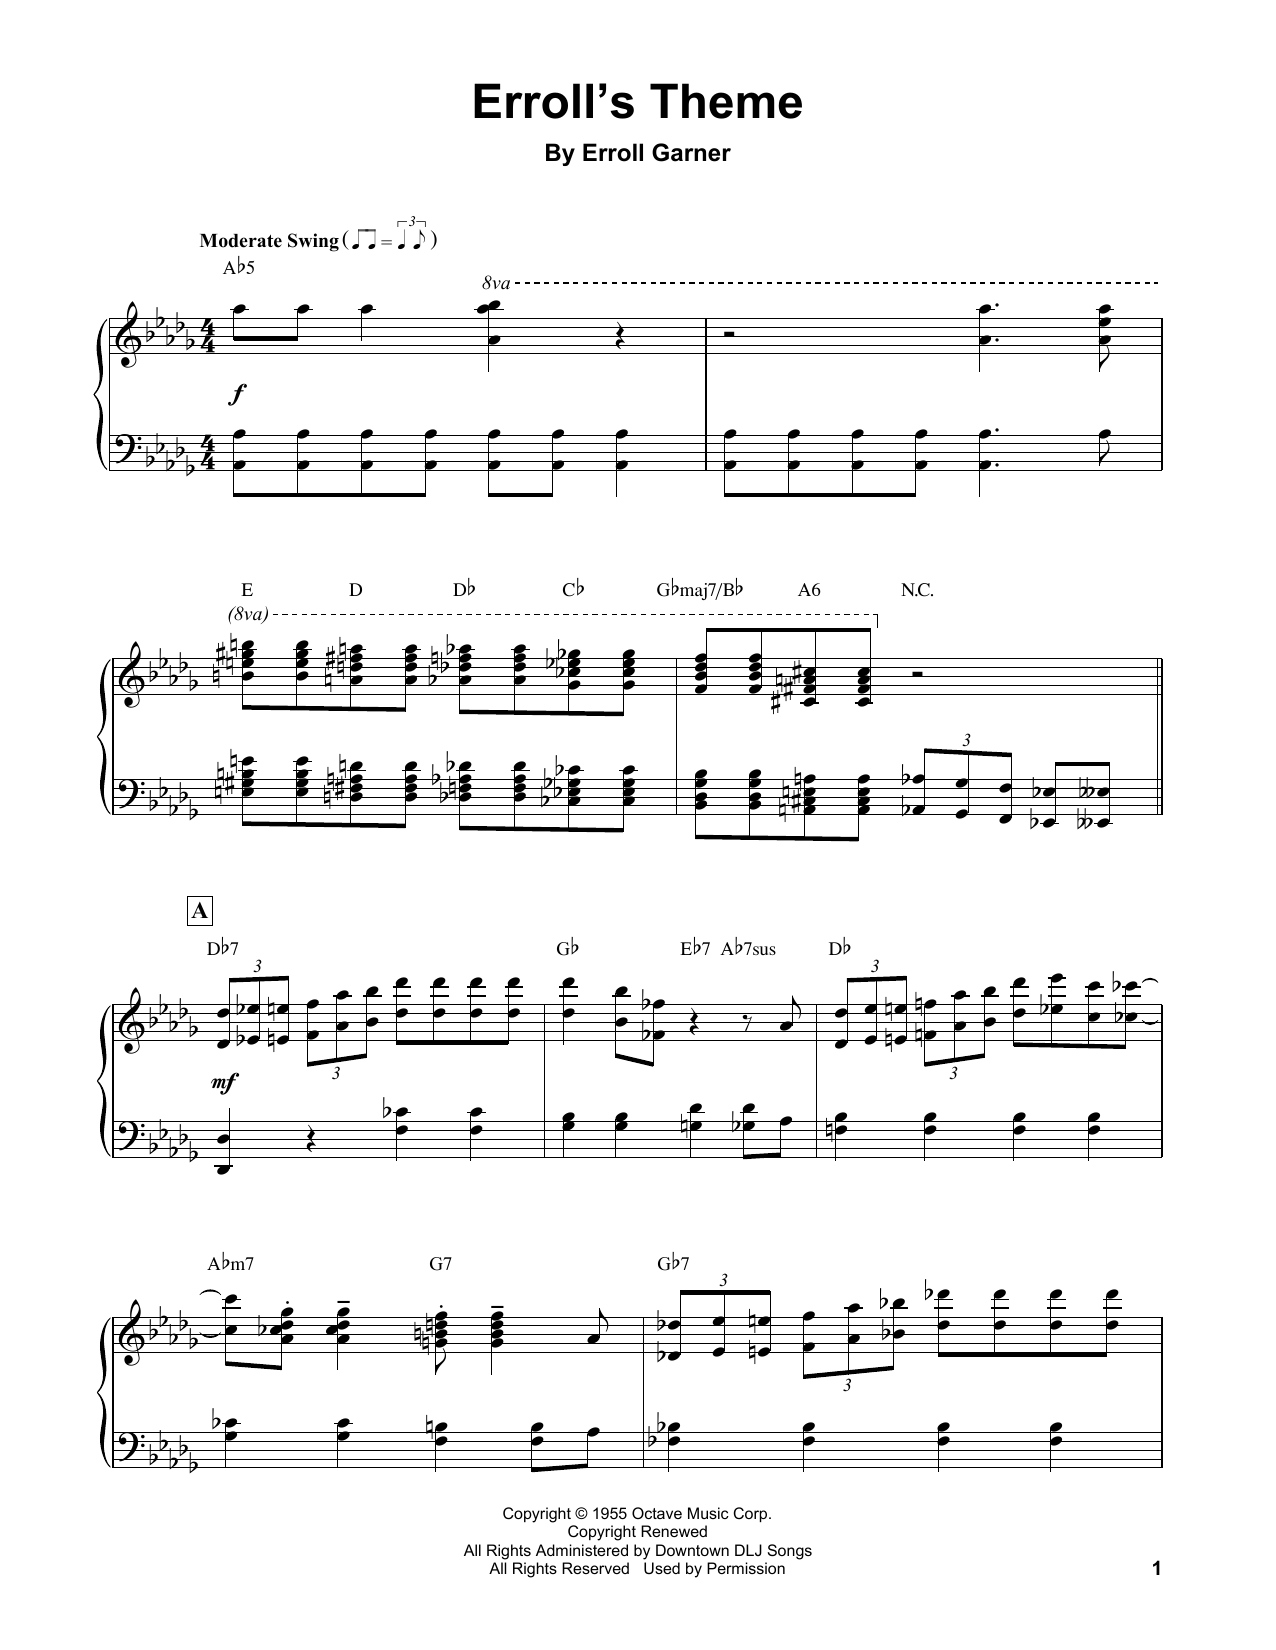 Erroll Garner Erroll's Theme Sheet Music Notes & Chords for Piano Transcription - Download or Print PDF